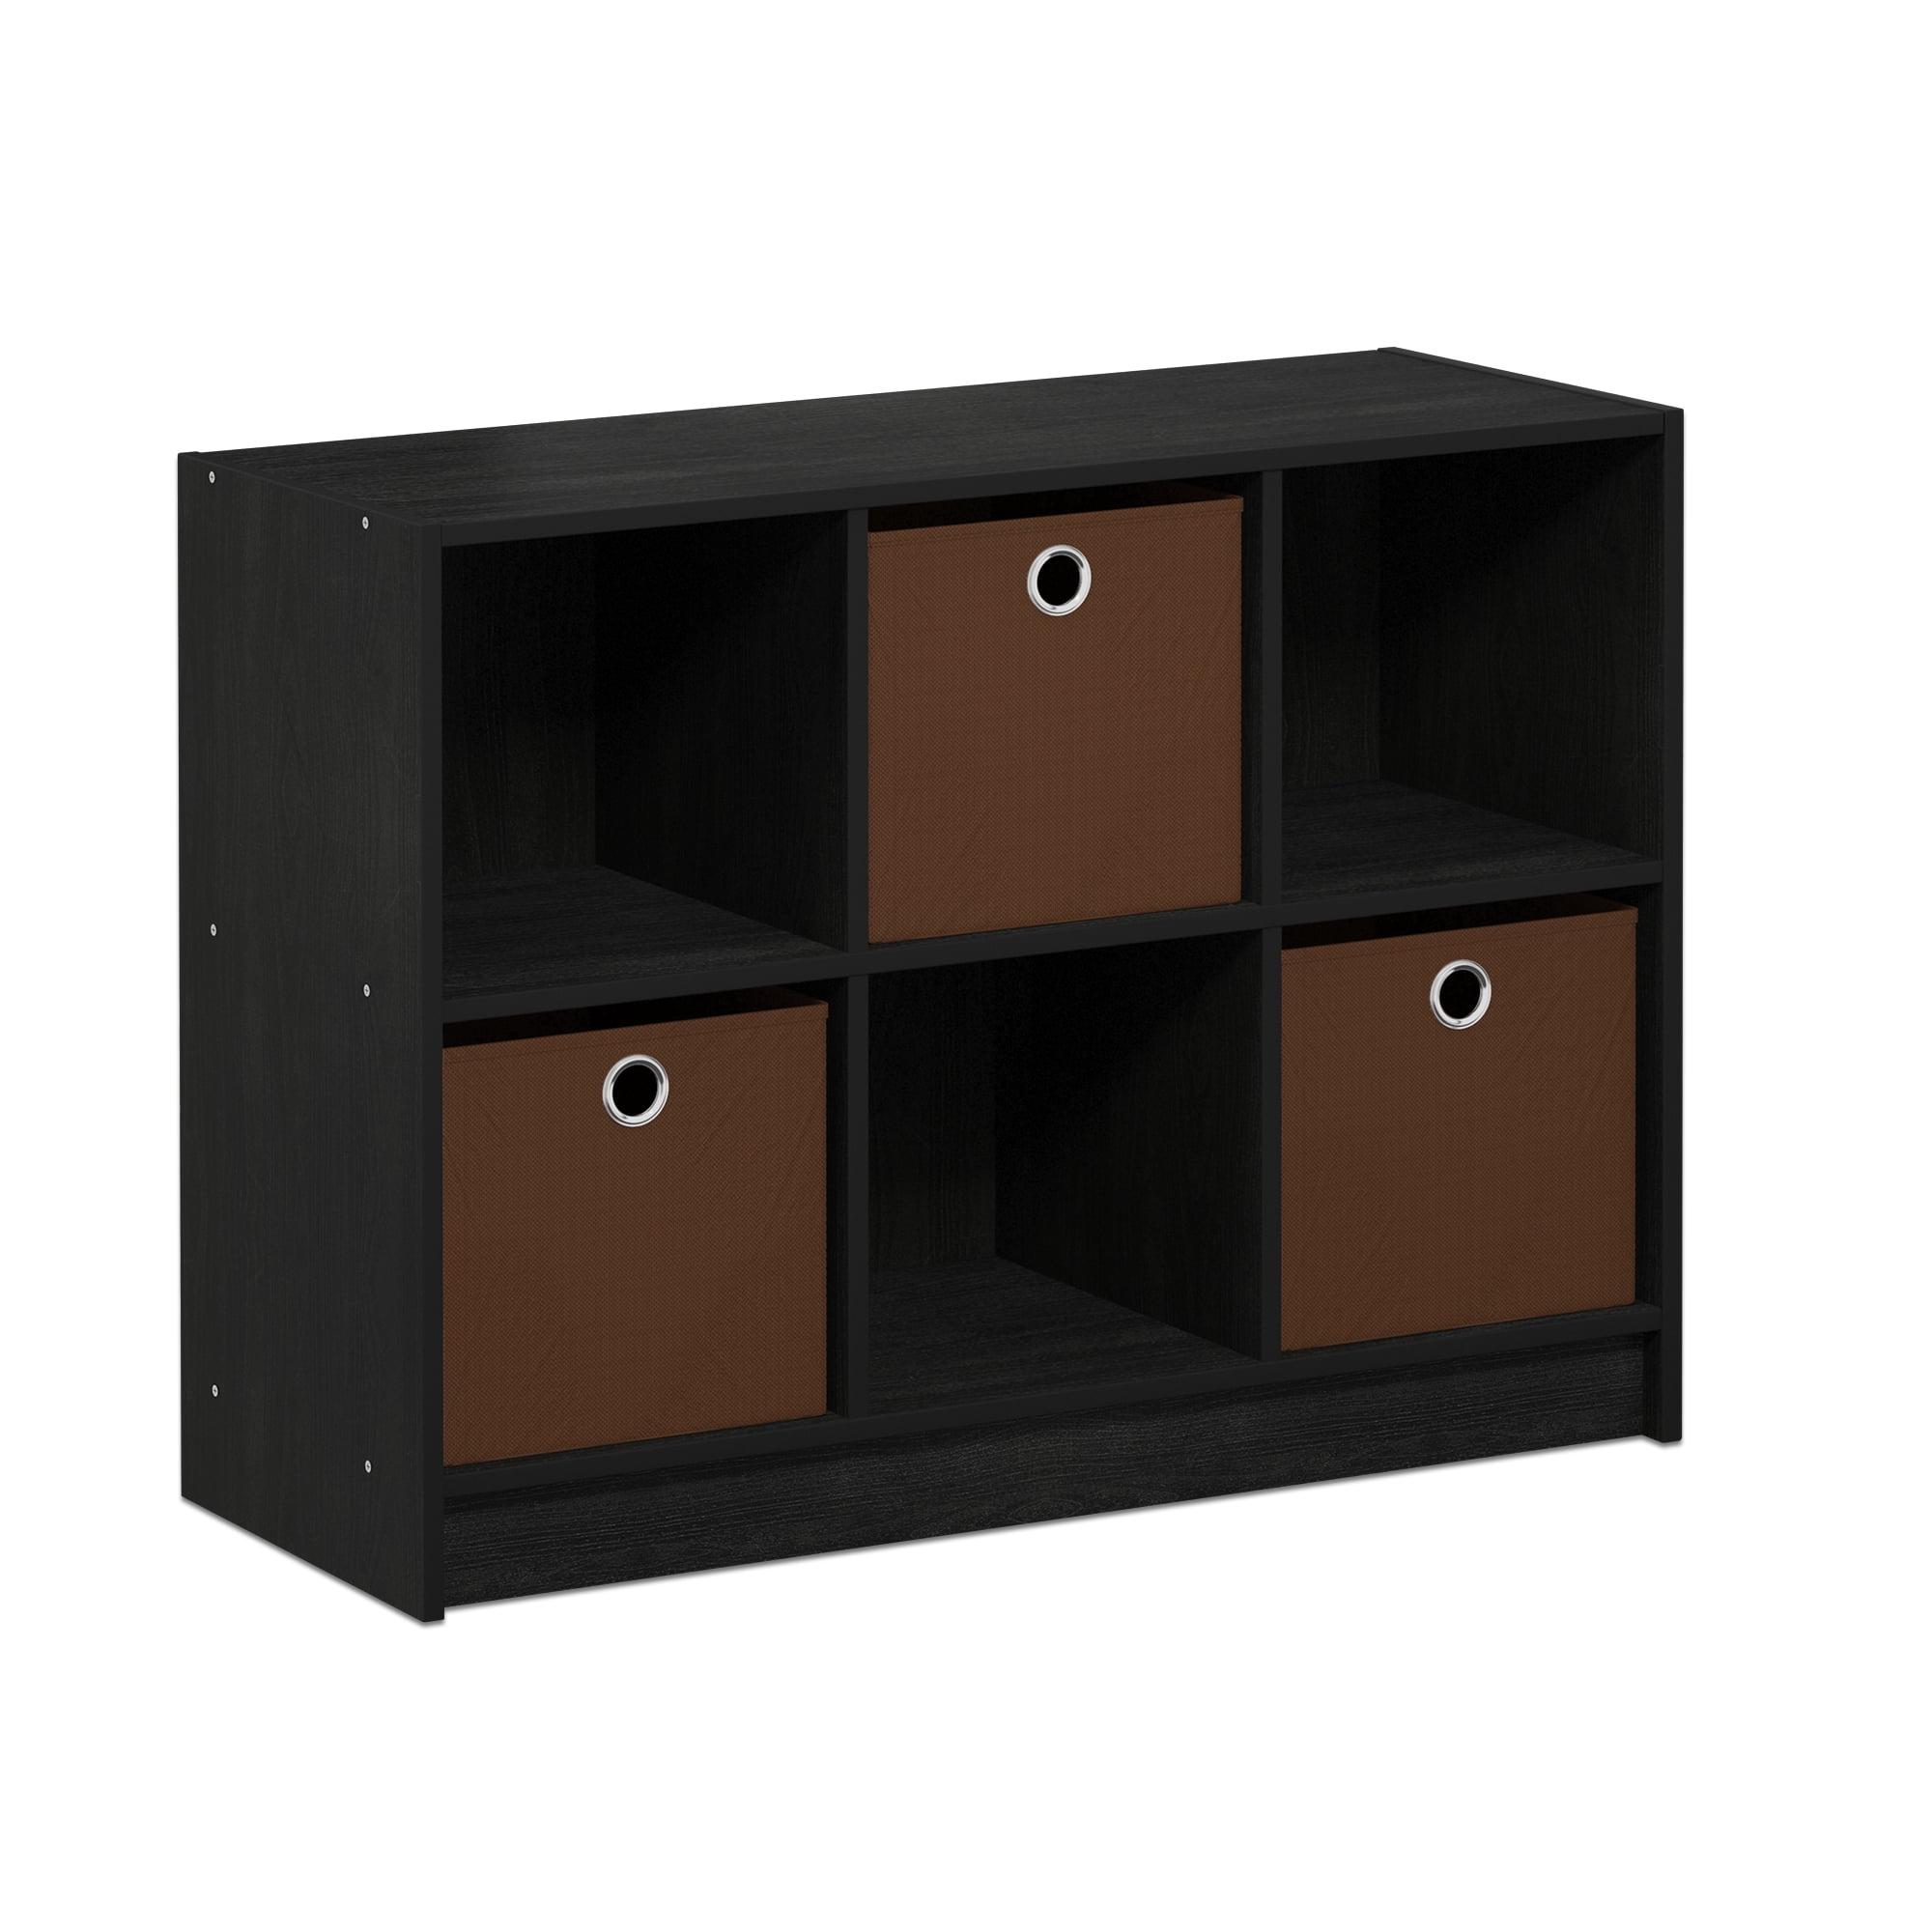 Study Room Essentials 6-Cube Oak Laminated Organizer with Bins